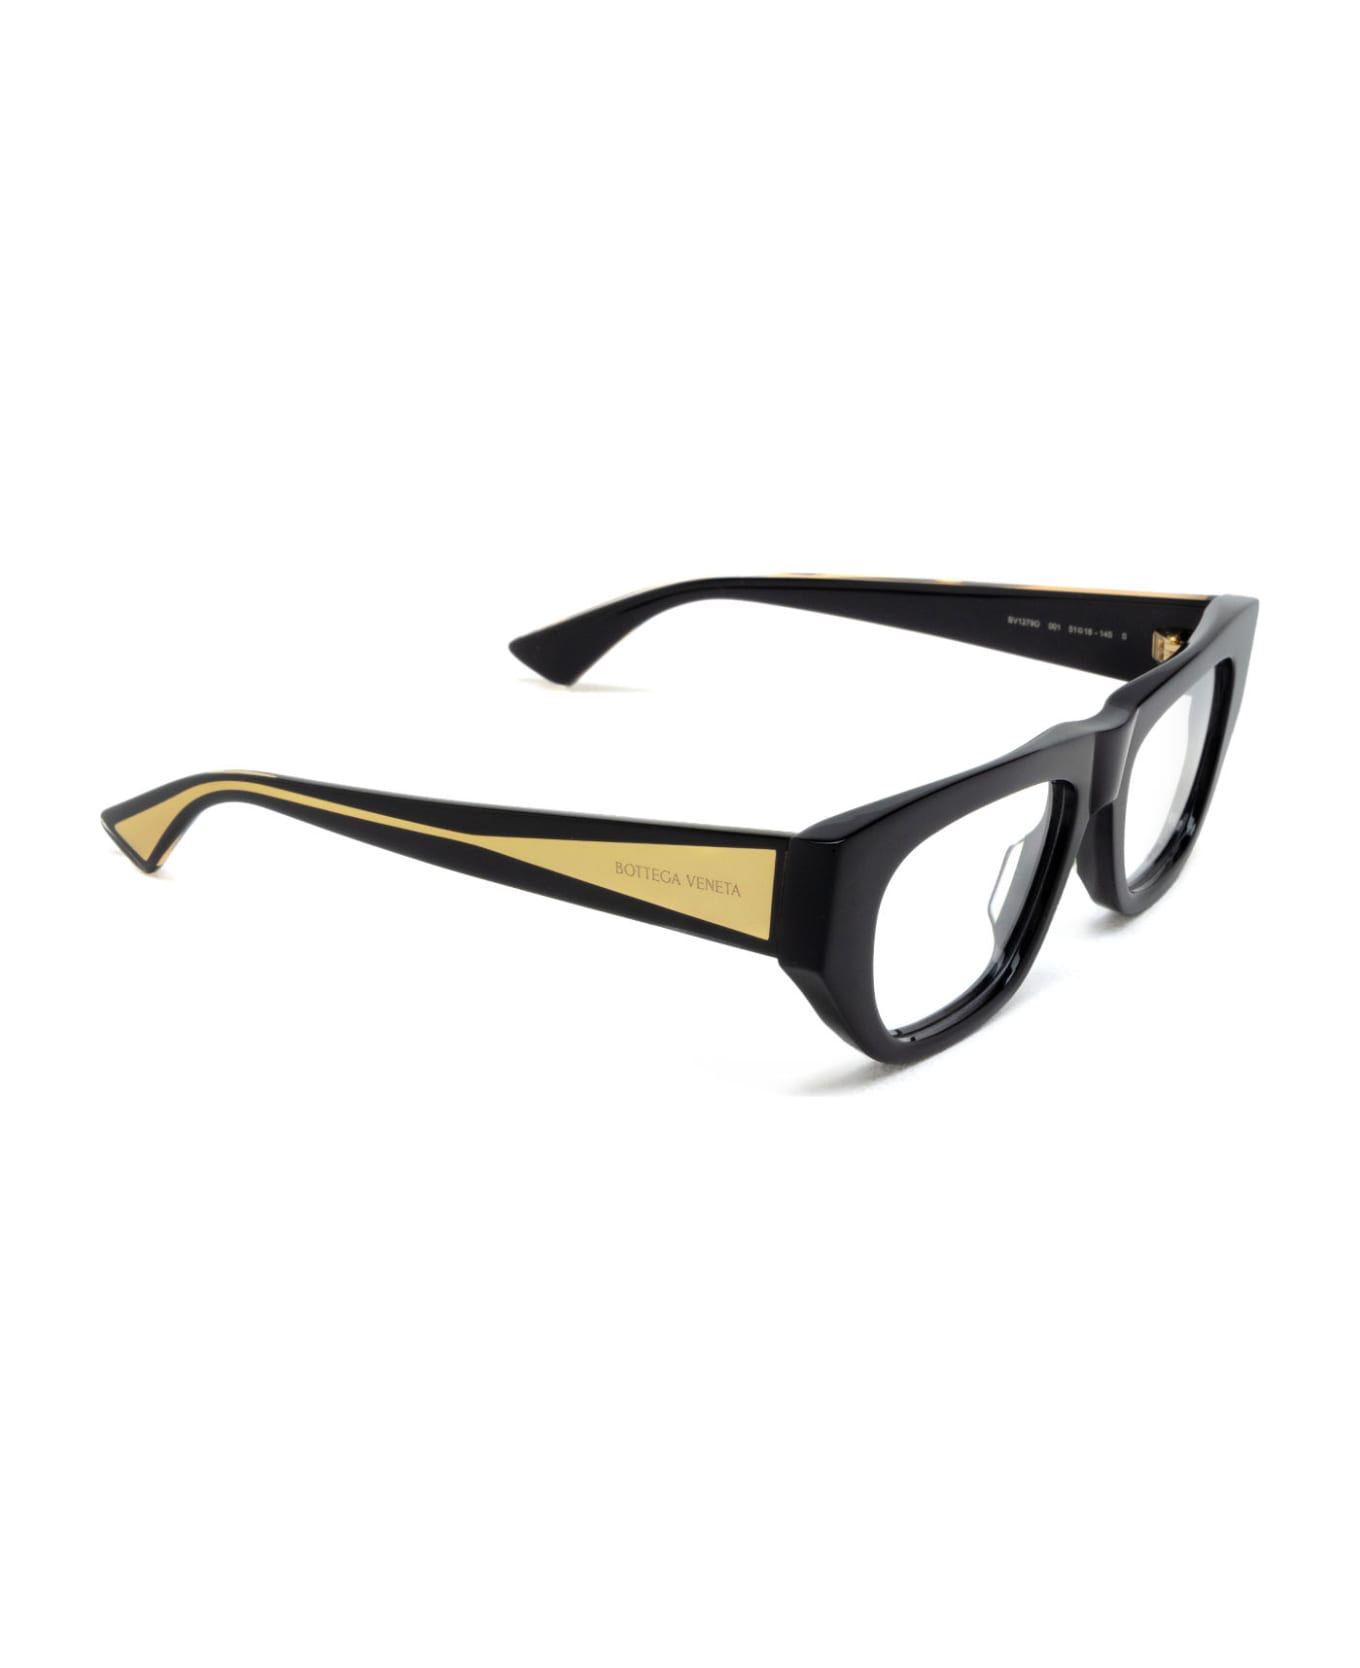 Bottega Veneta Eyewear Bv1279o Black Glasses - Black